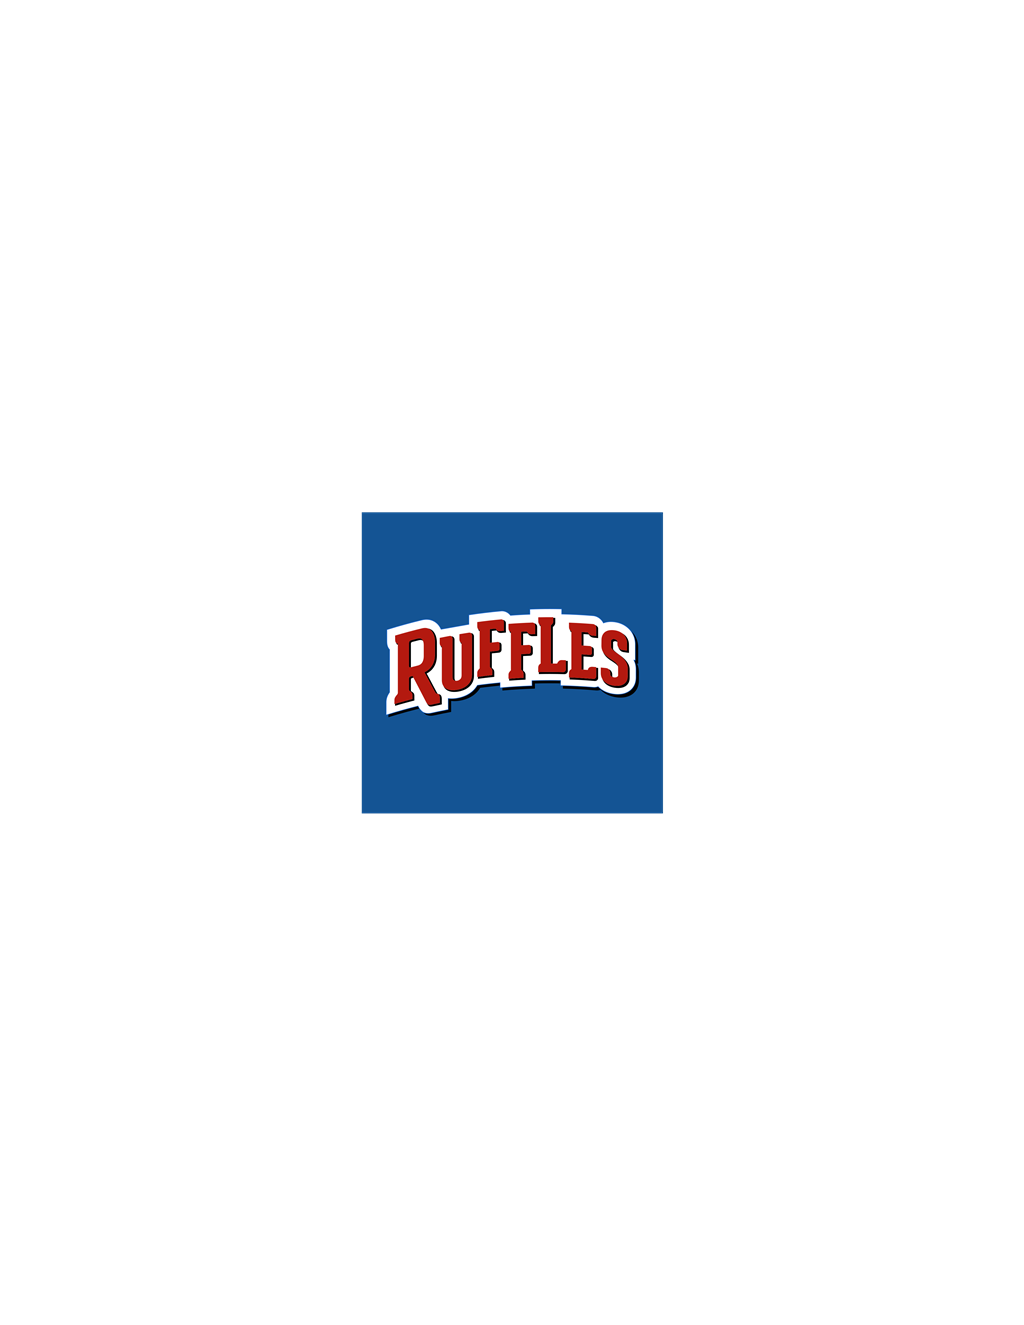 Ruffles logotype, transparent .png, medium, large